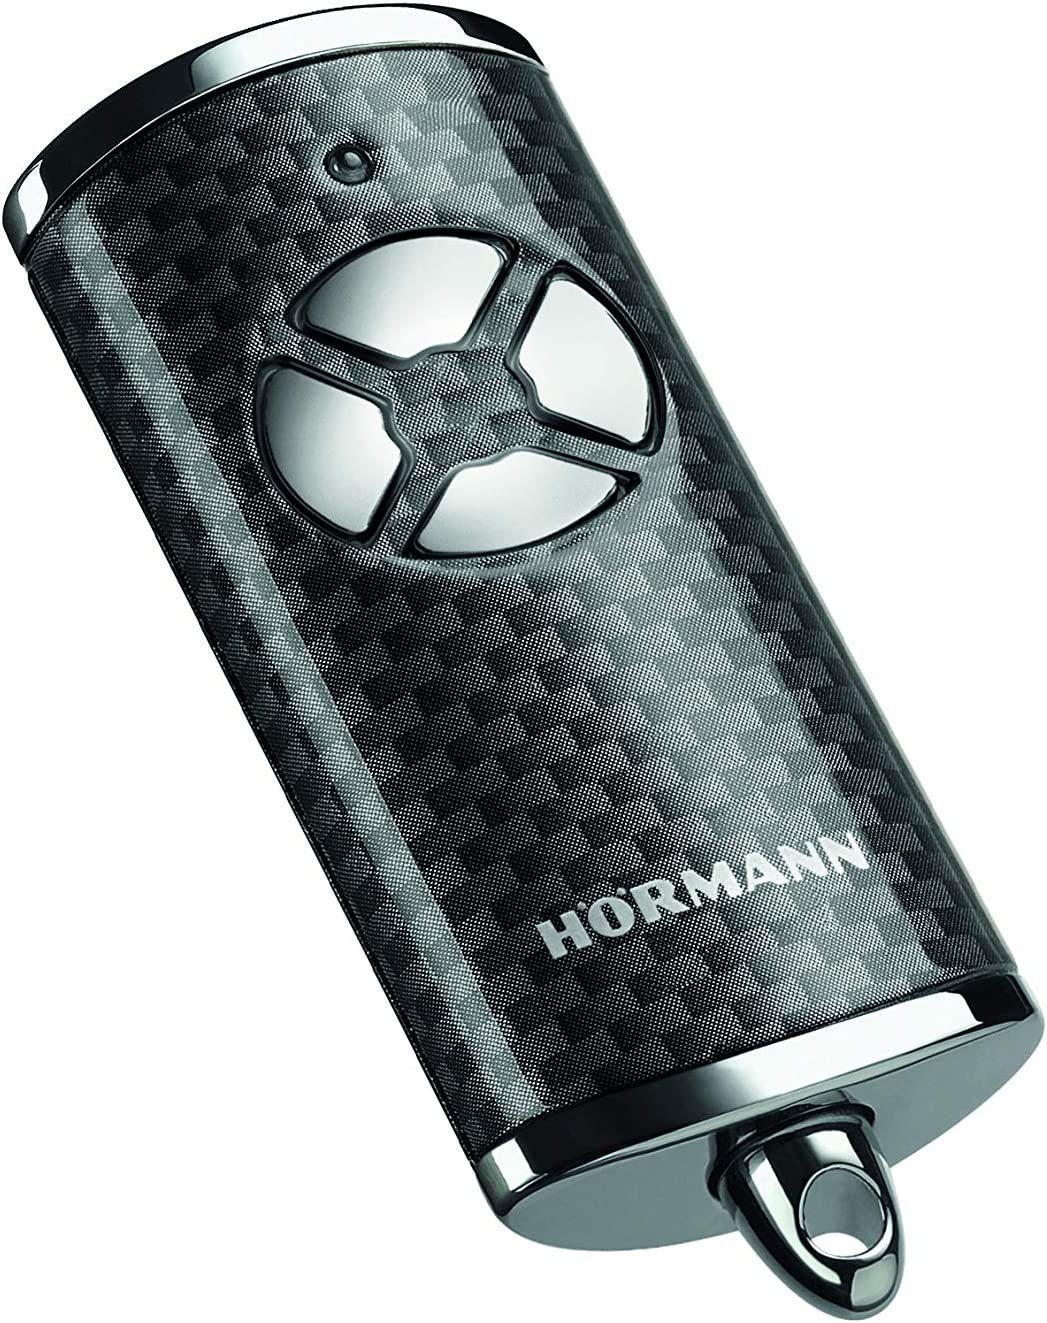 Hörmann Garagentor-Funkempfänger HSE4 868-BS Hochglanz Chrom Carbon Fernbedienung | Funksteuerungsmodule